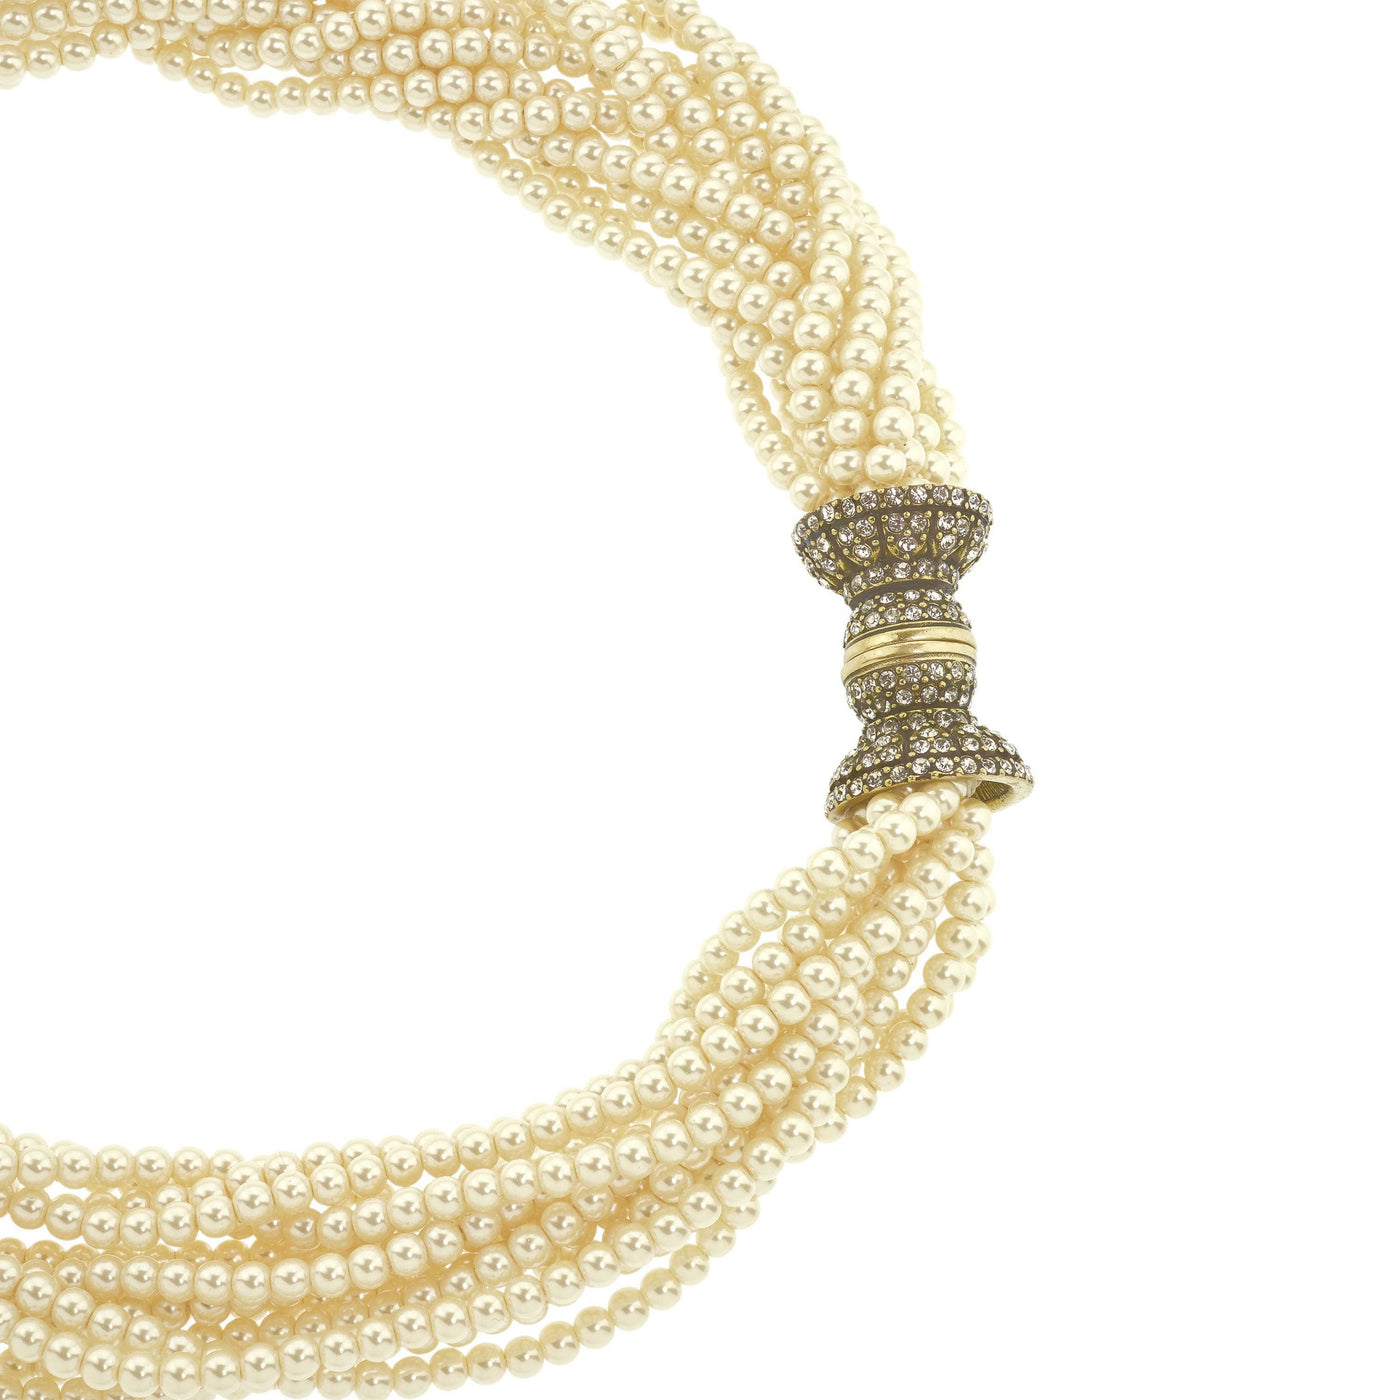 HEIDI DAUS® "Regal Legacy" Beaded Crystal Magnetic Necklace